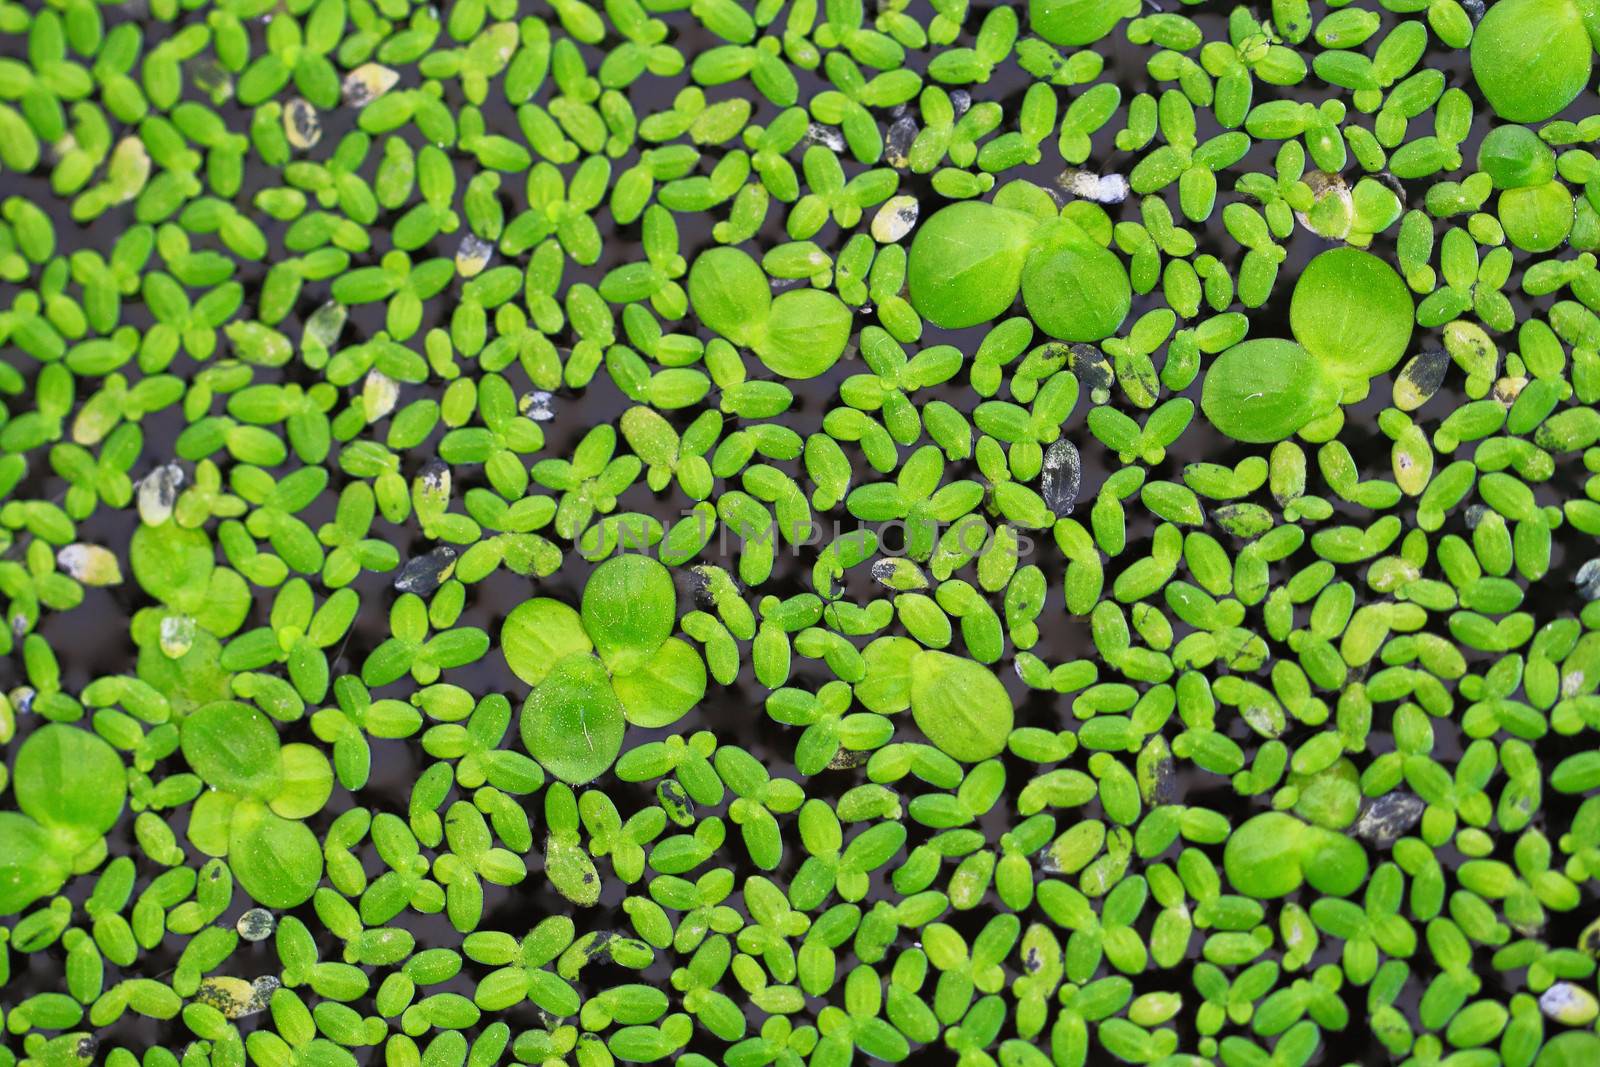 Green algae occur in naturally